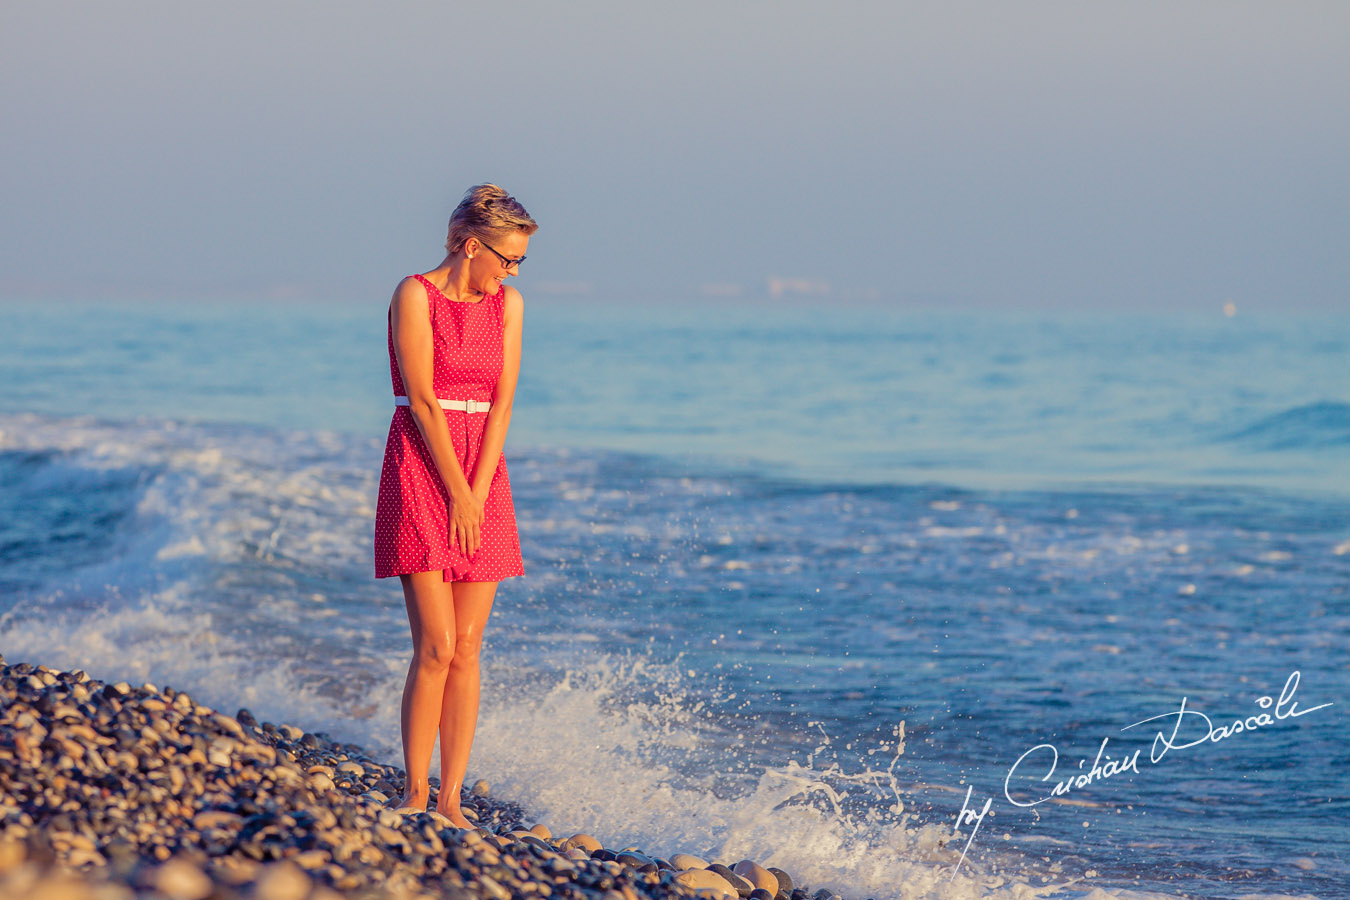 Beach photo shoot in Cyprus - Maria, Moods. Cyprus Photographer: Cristian Dascalu